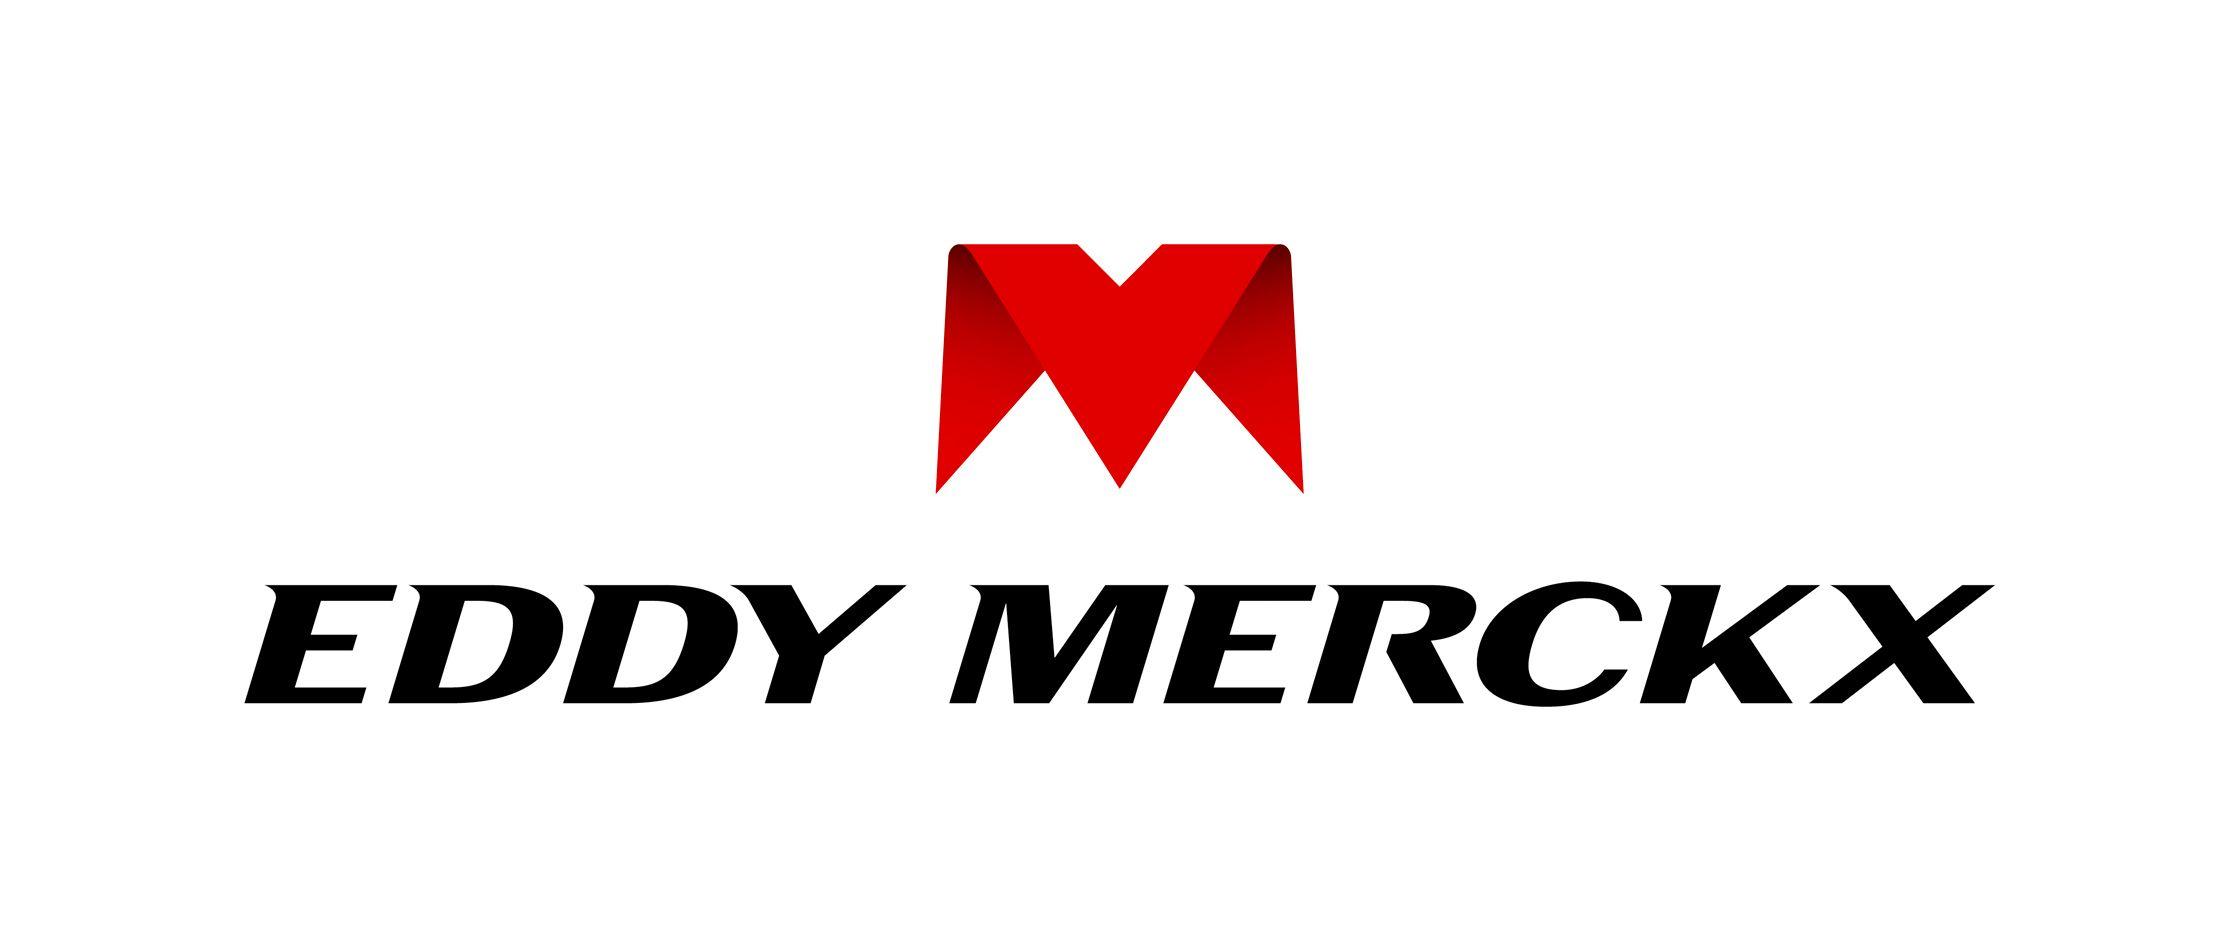 Eddy Logo - File:Eddy Merckx Logo.jpg - Wikimedia Commons